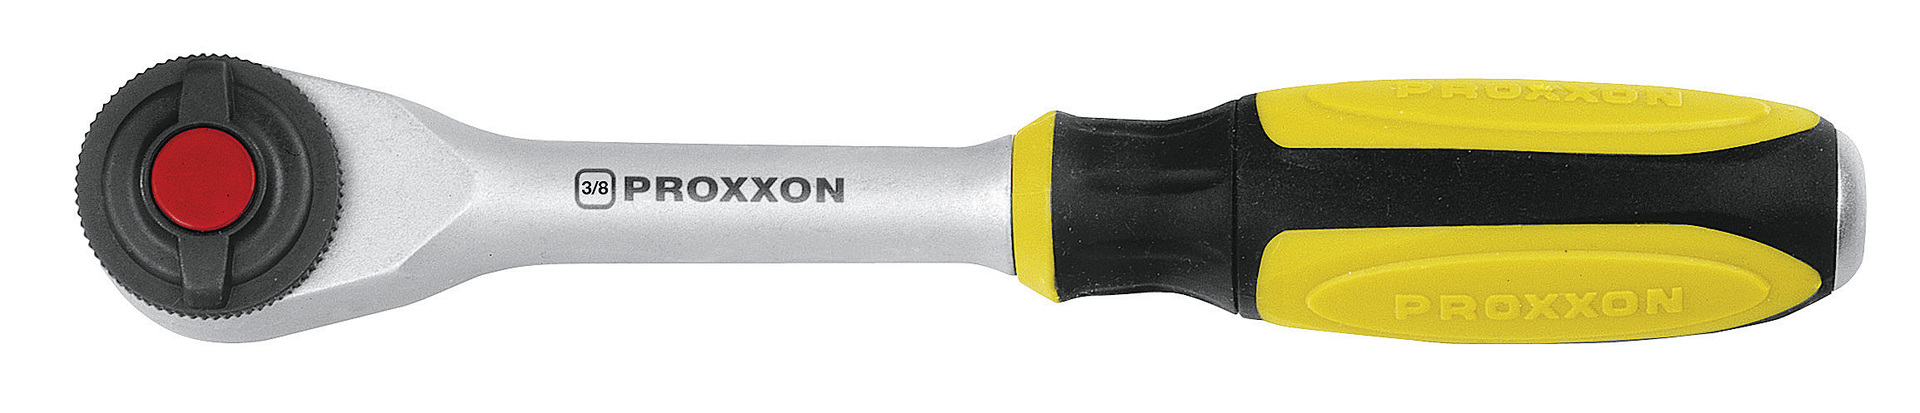 PROXXON Rotary-Ratsche